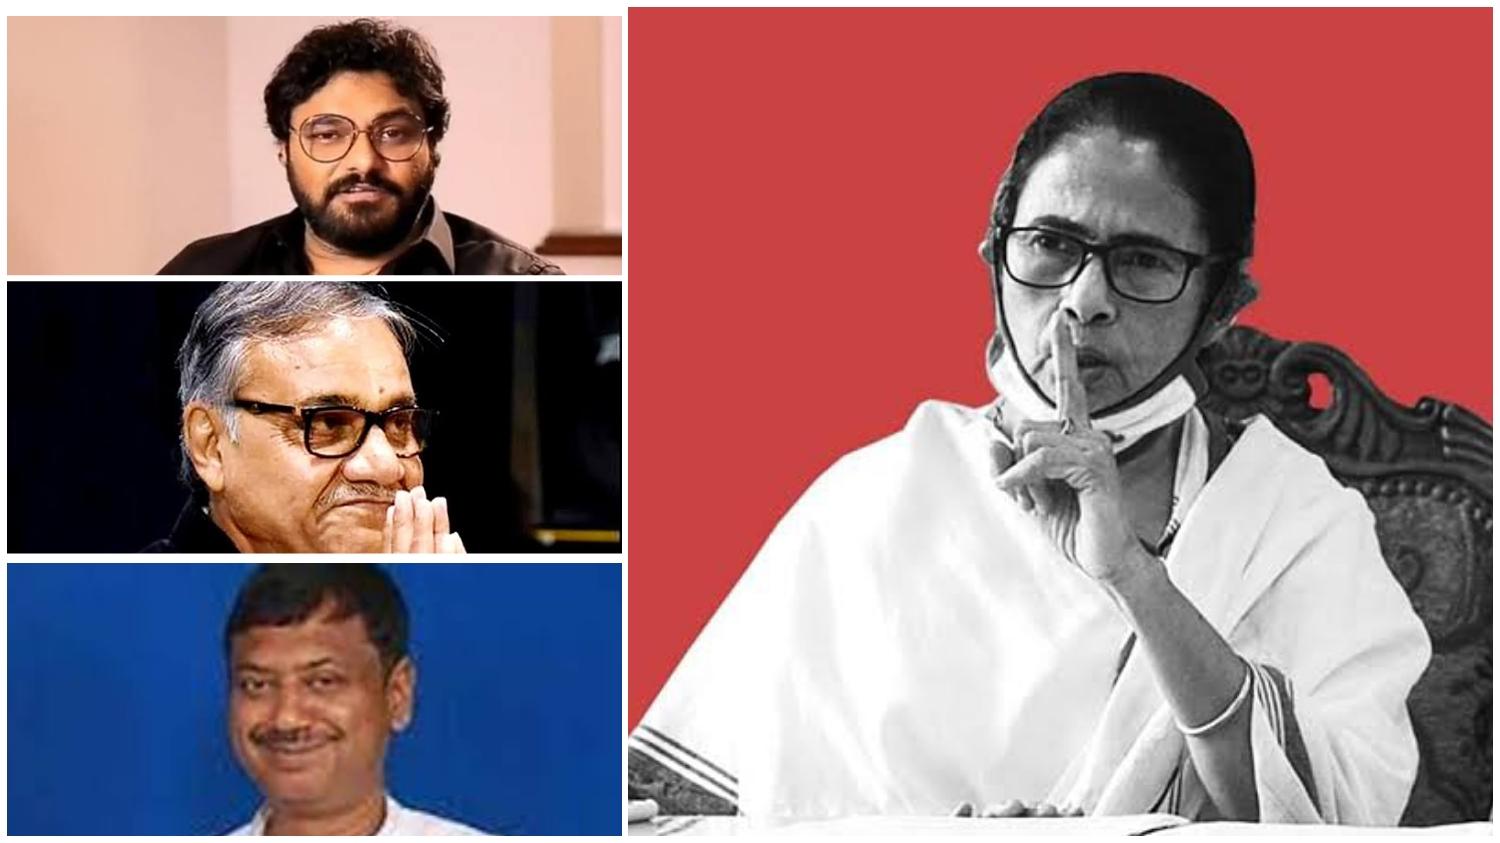 West Bengal Cabinet: রদবদল হচ্ছে রাজ্য মন্ত্রিসভায়, নতুন দায়িত্বে কারা? বাদ পড়তে পারেন কে কে?